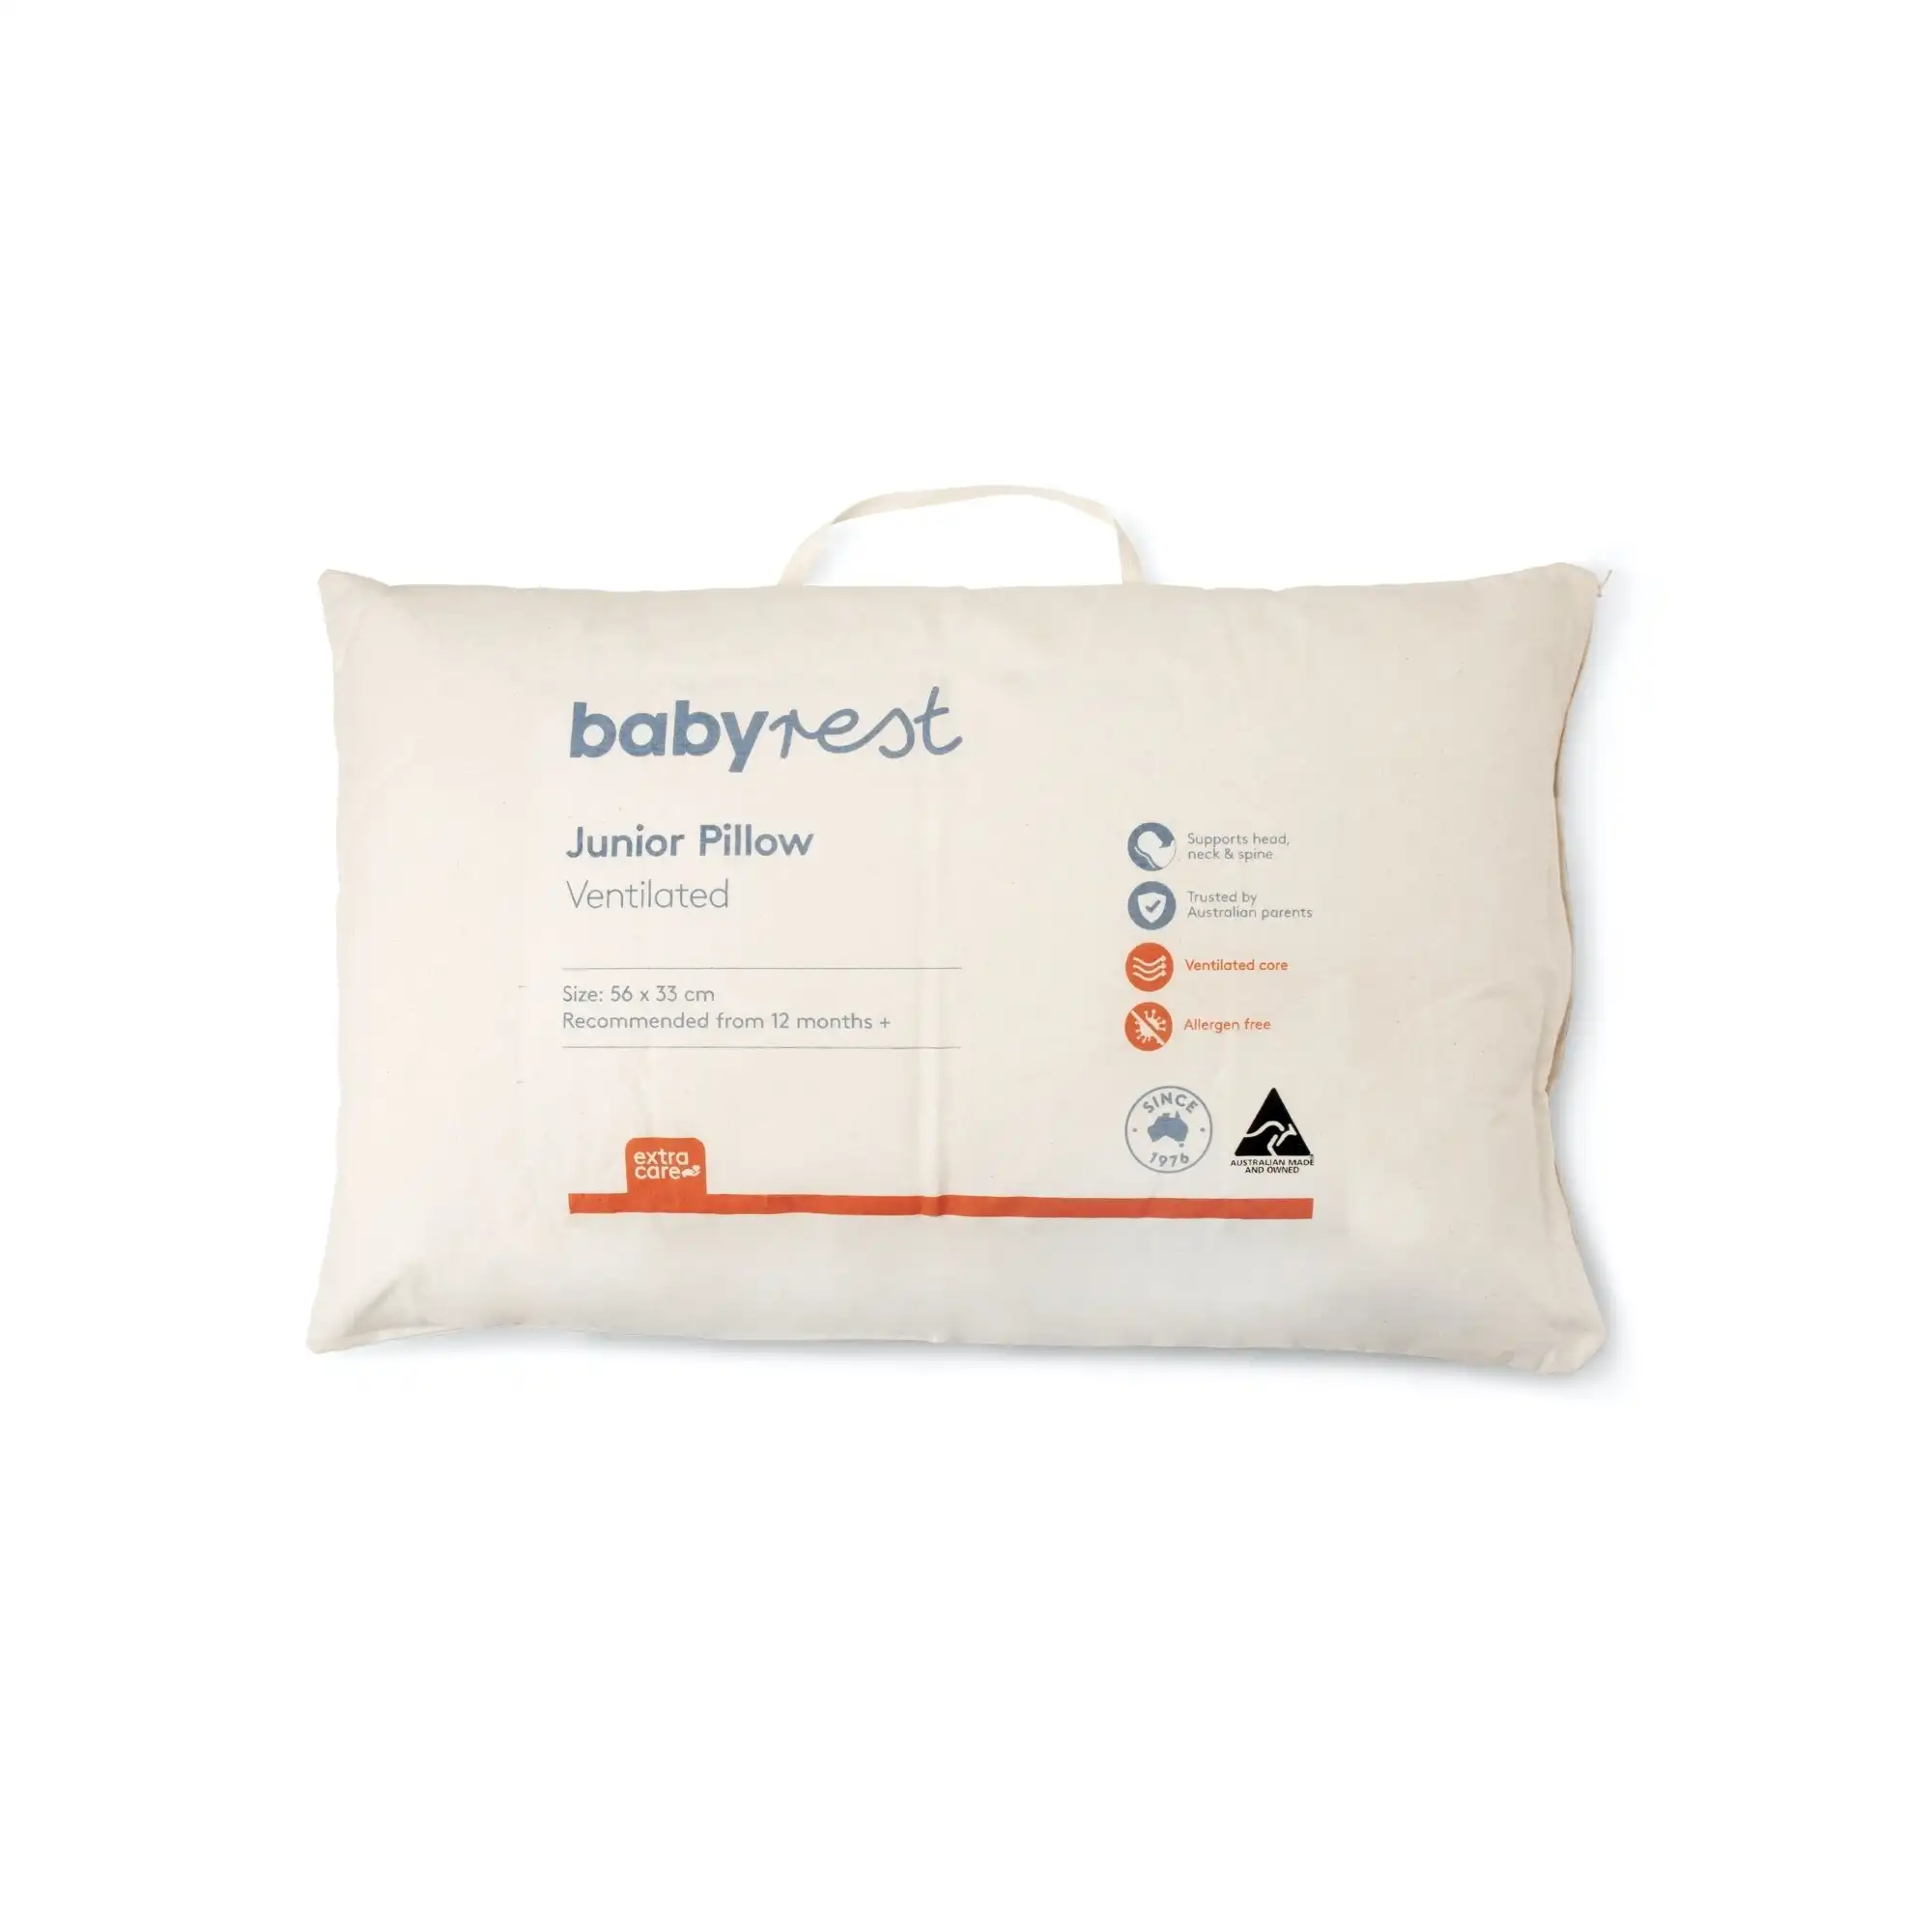 Babyrest Junior Pillow - Ventilated Core